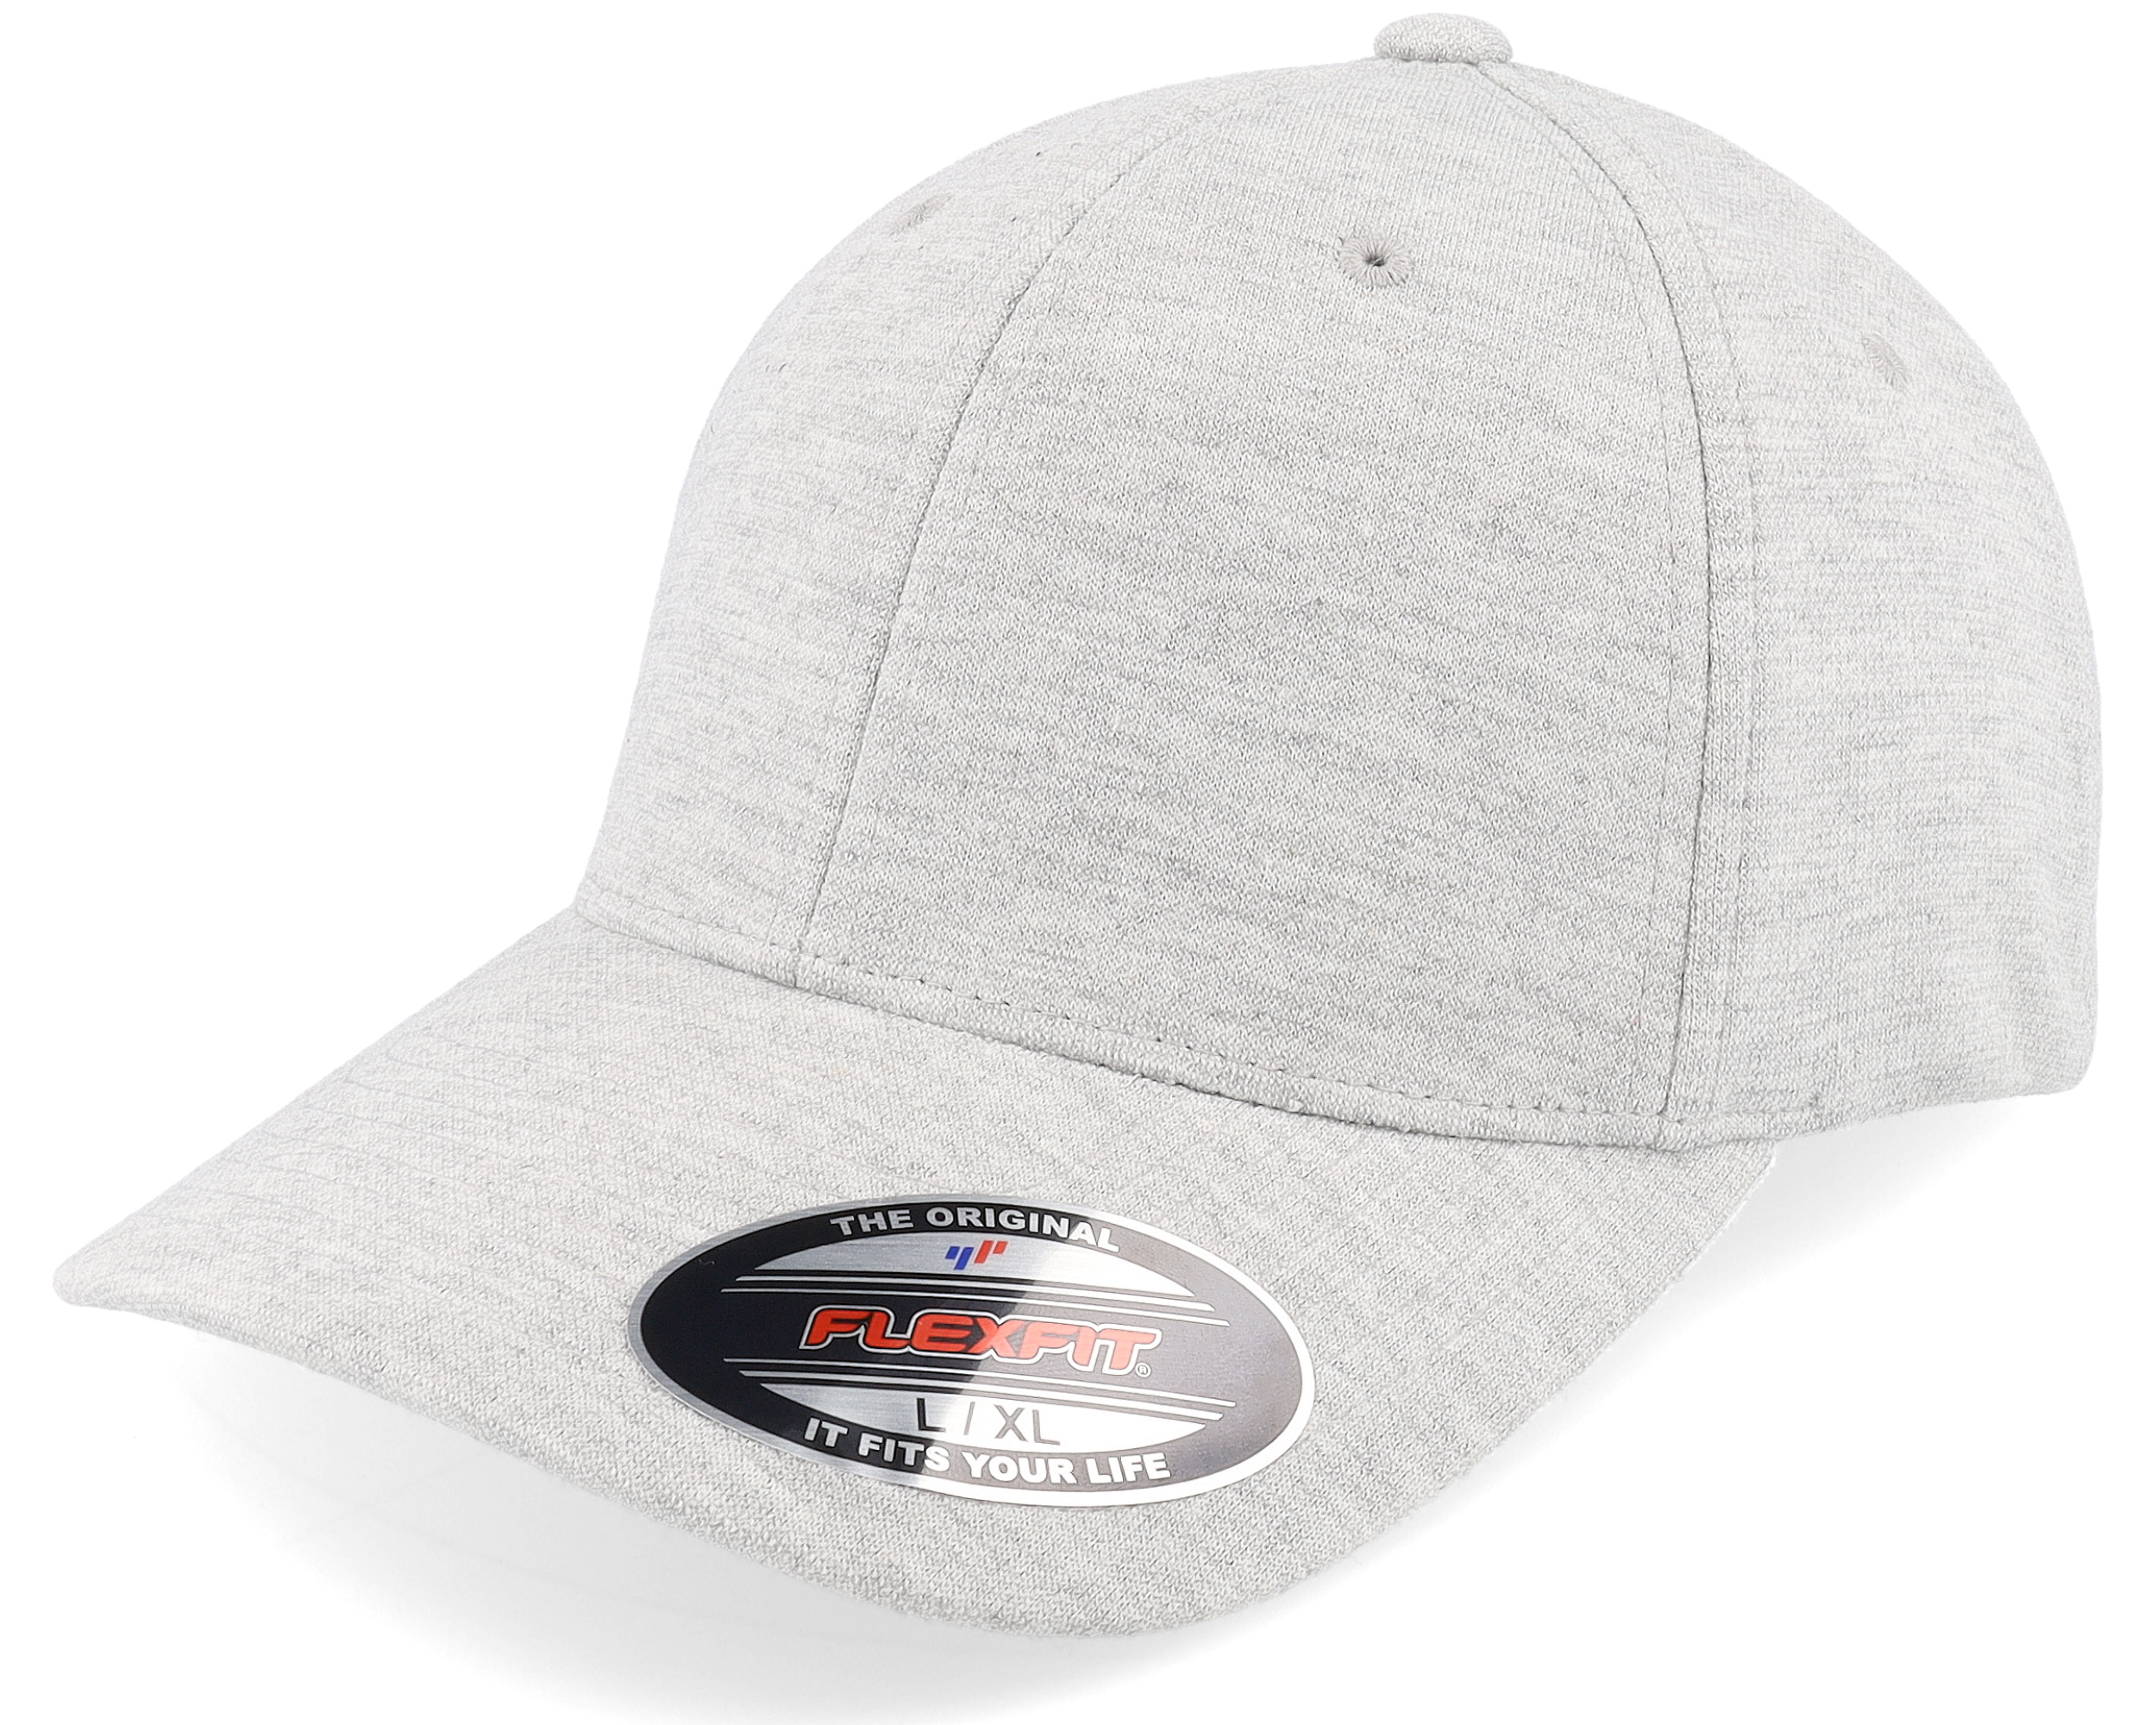 Double Jersey cap Heather Flexfit - Grey